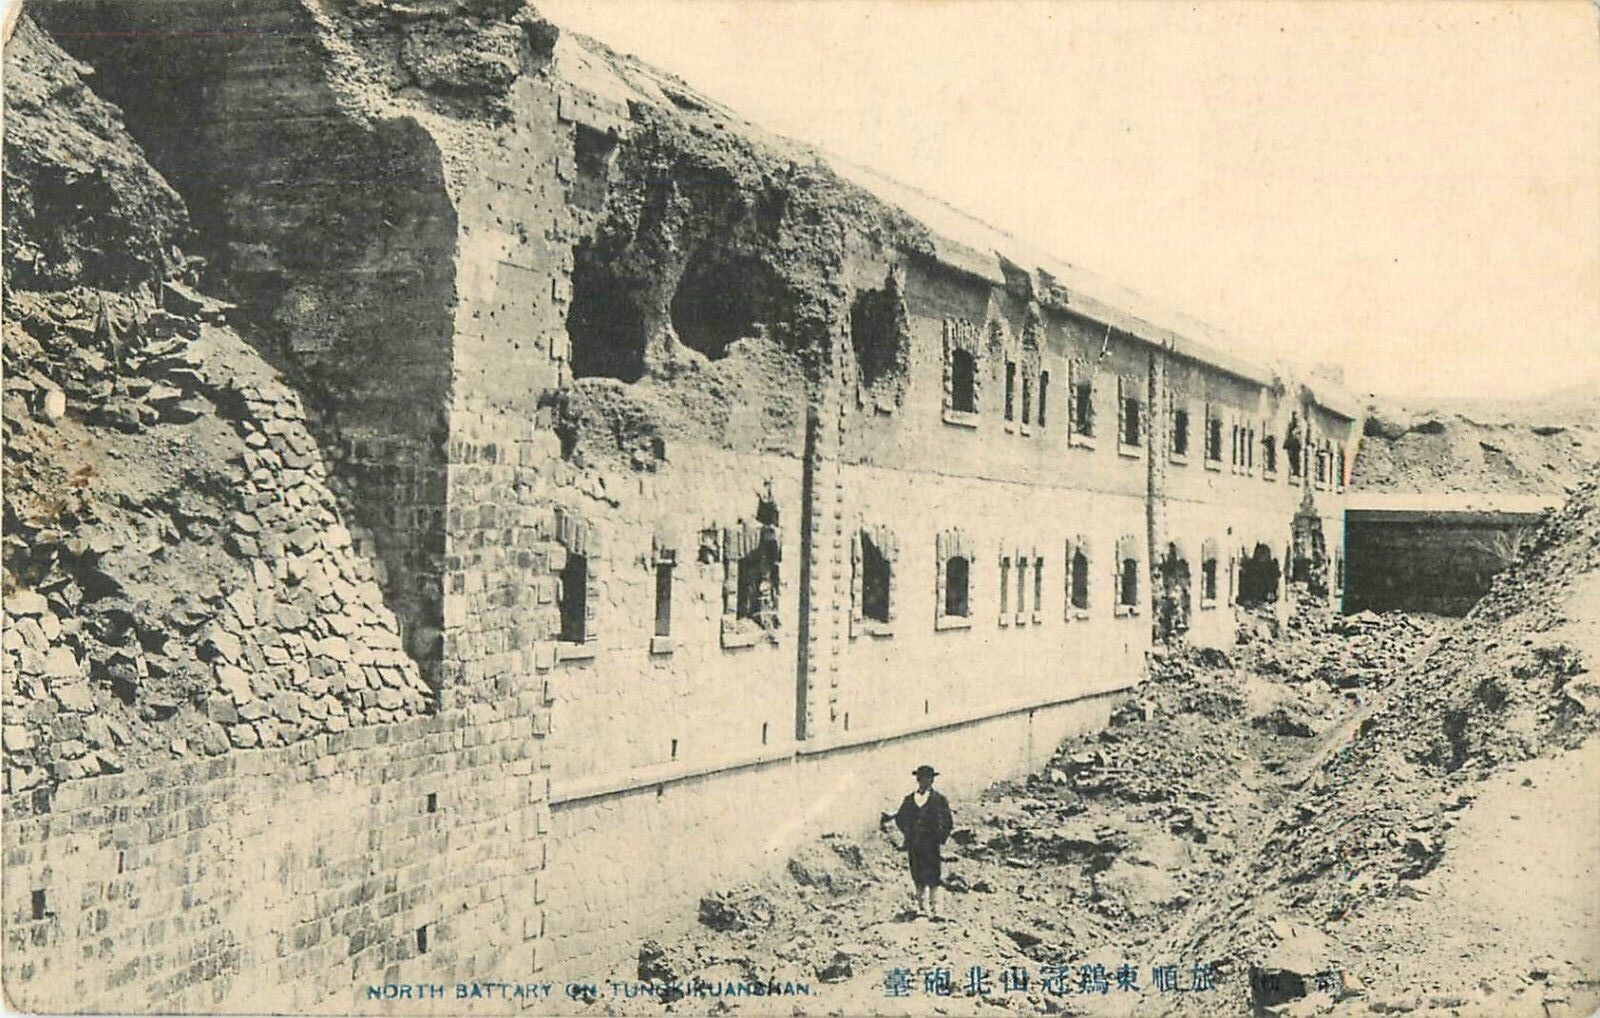 c1910 North Battery on Tungkikuanshan, China Postcard